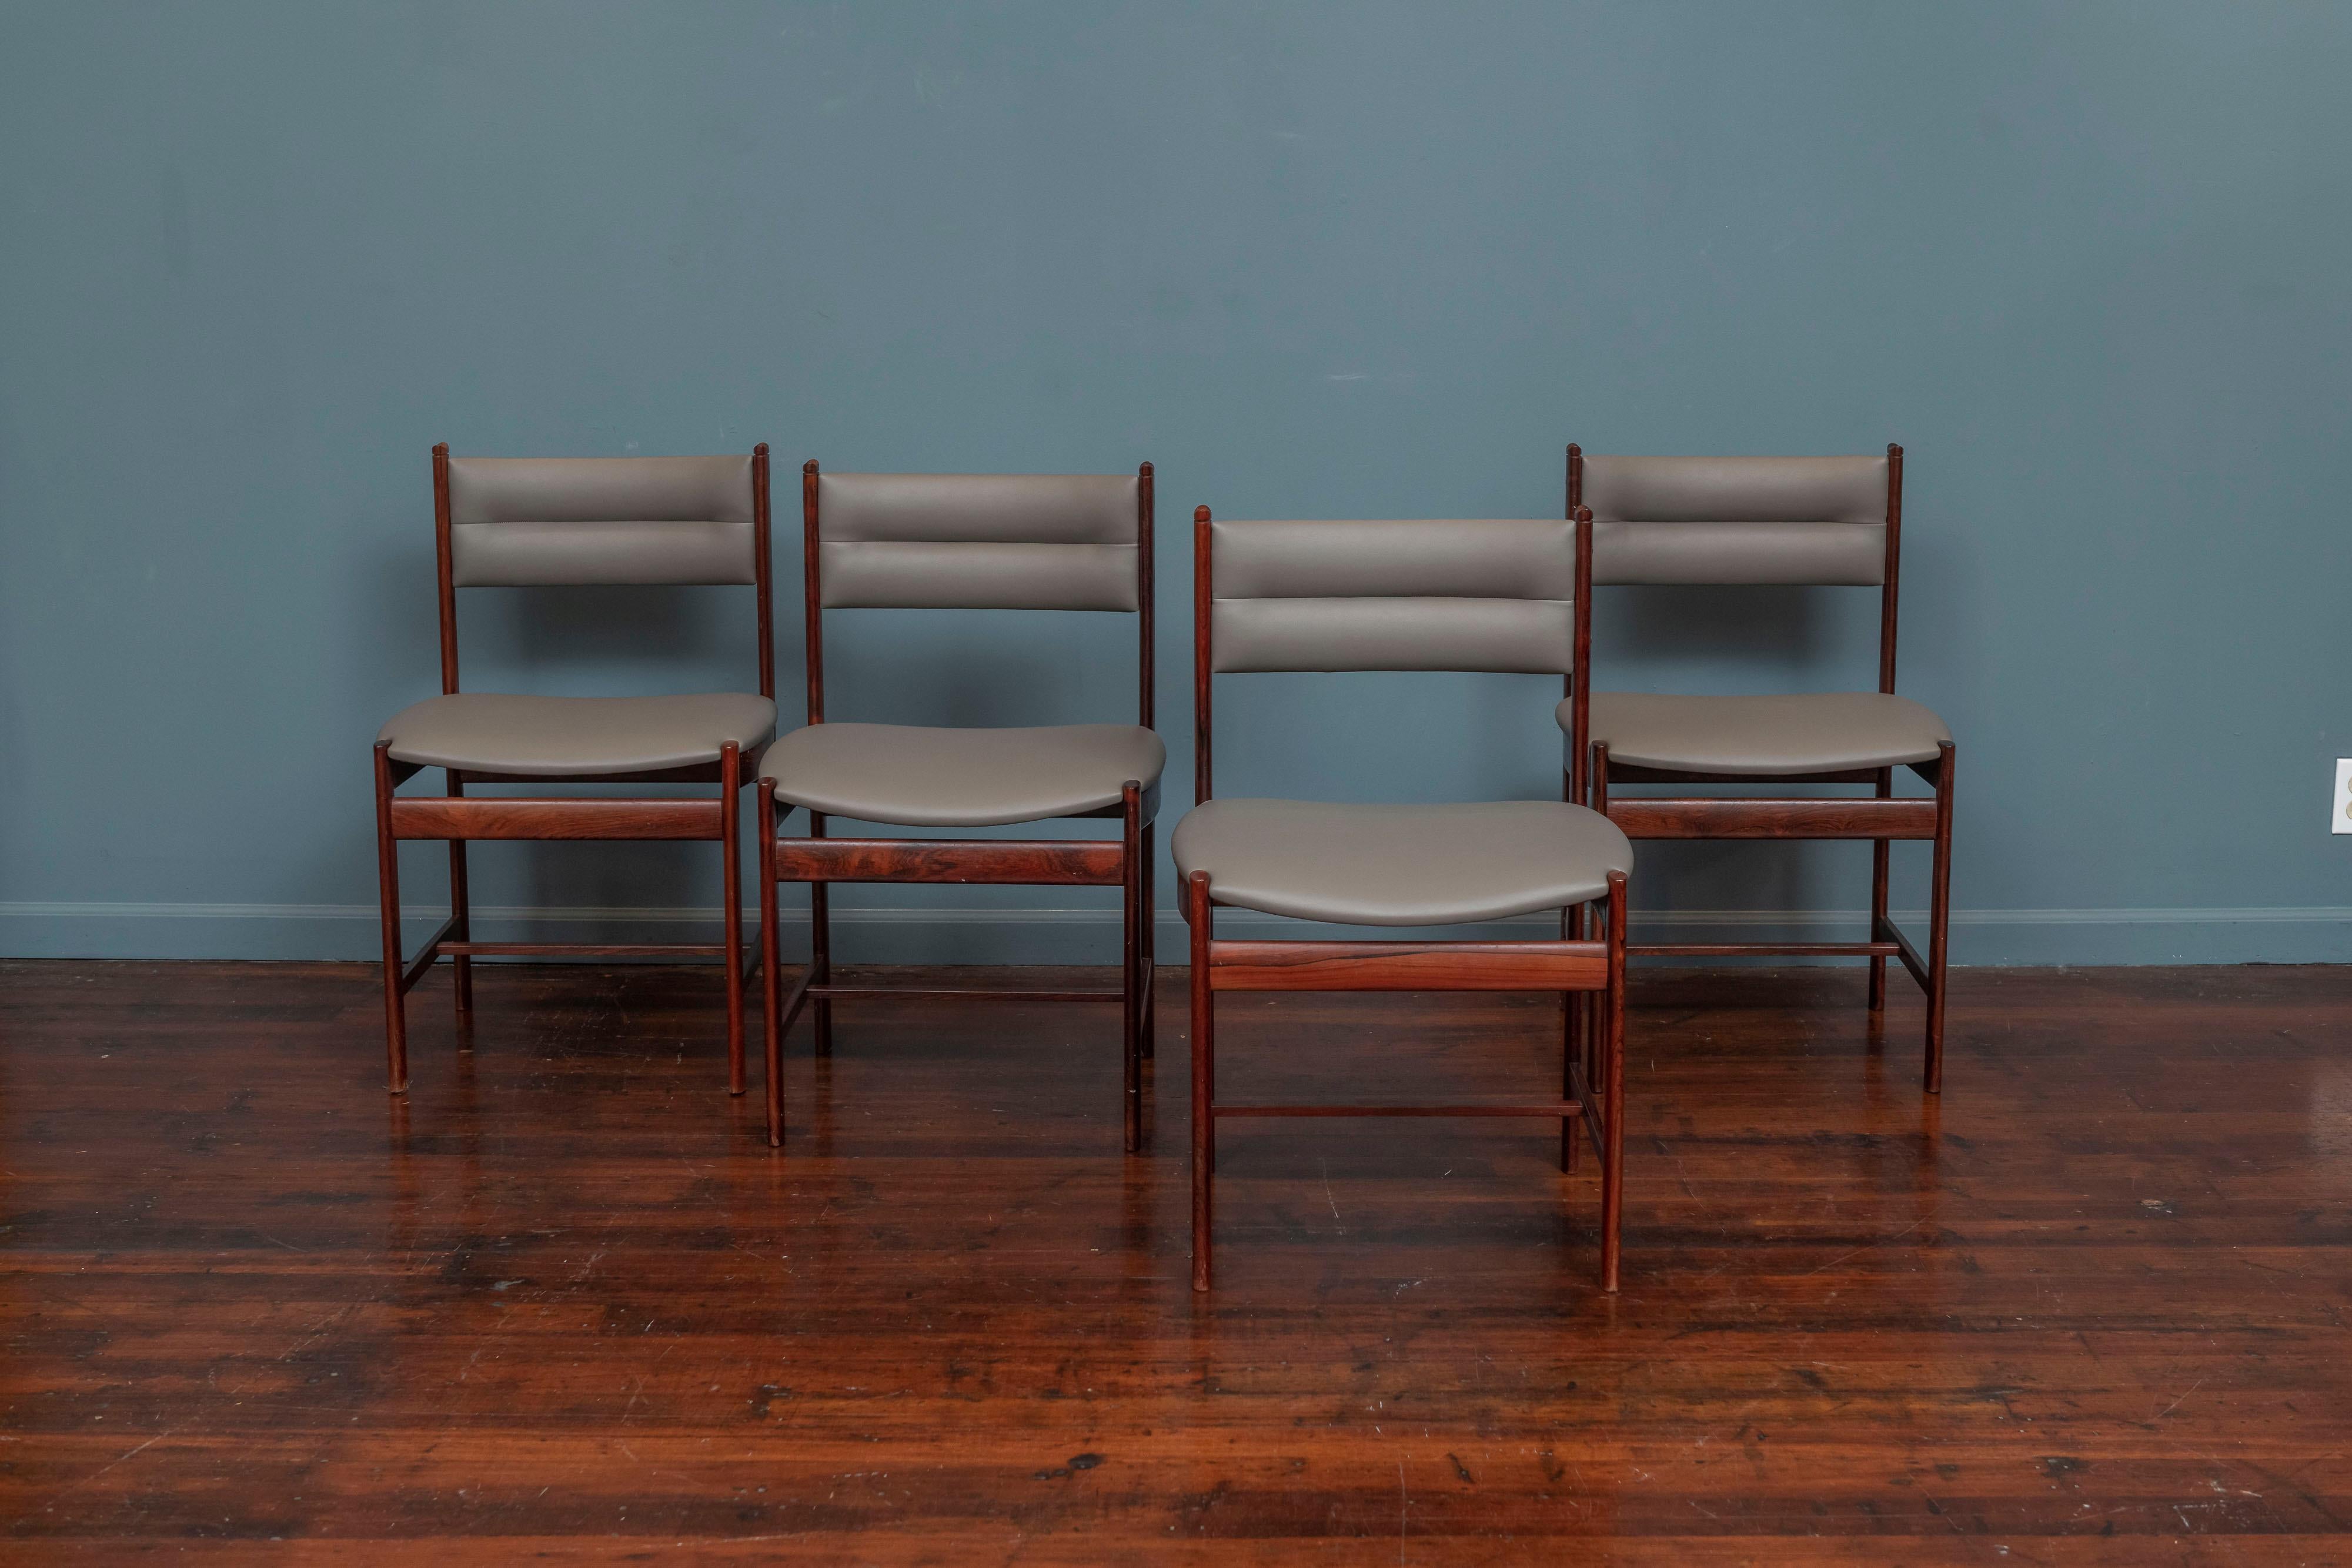 Skandinavische moderne Stühle aus Palisanderholz, vier Stück, Dänemark.
 Neu gepolstert mit kittgrauem Vinylbezug und originalgetreuem Rahmen aus massivem Palisanderholz.